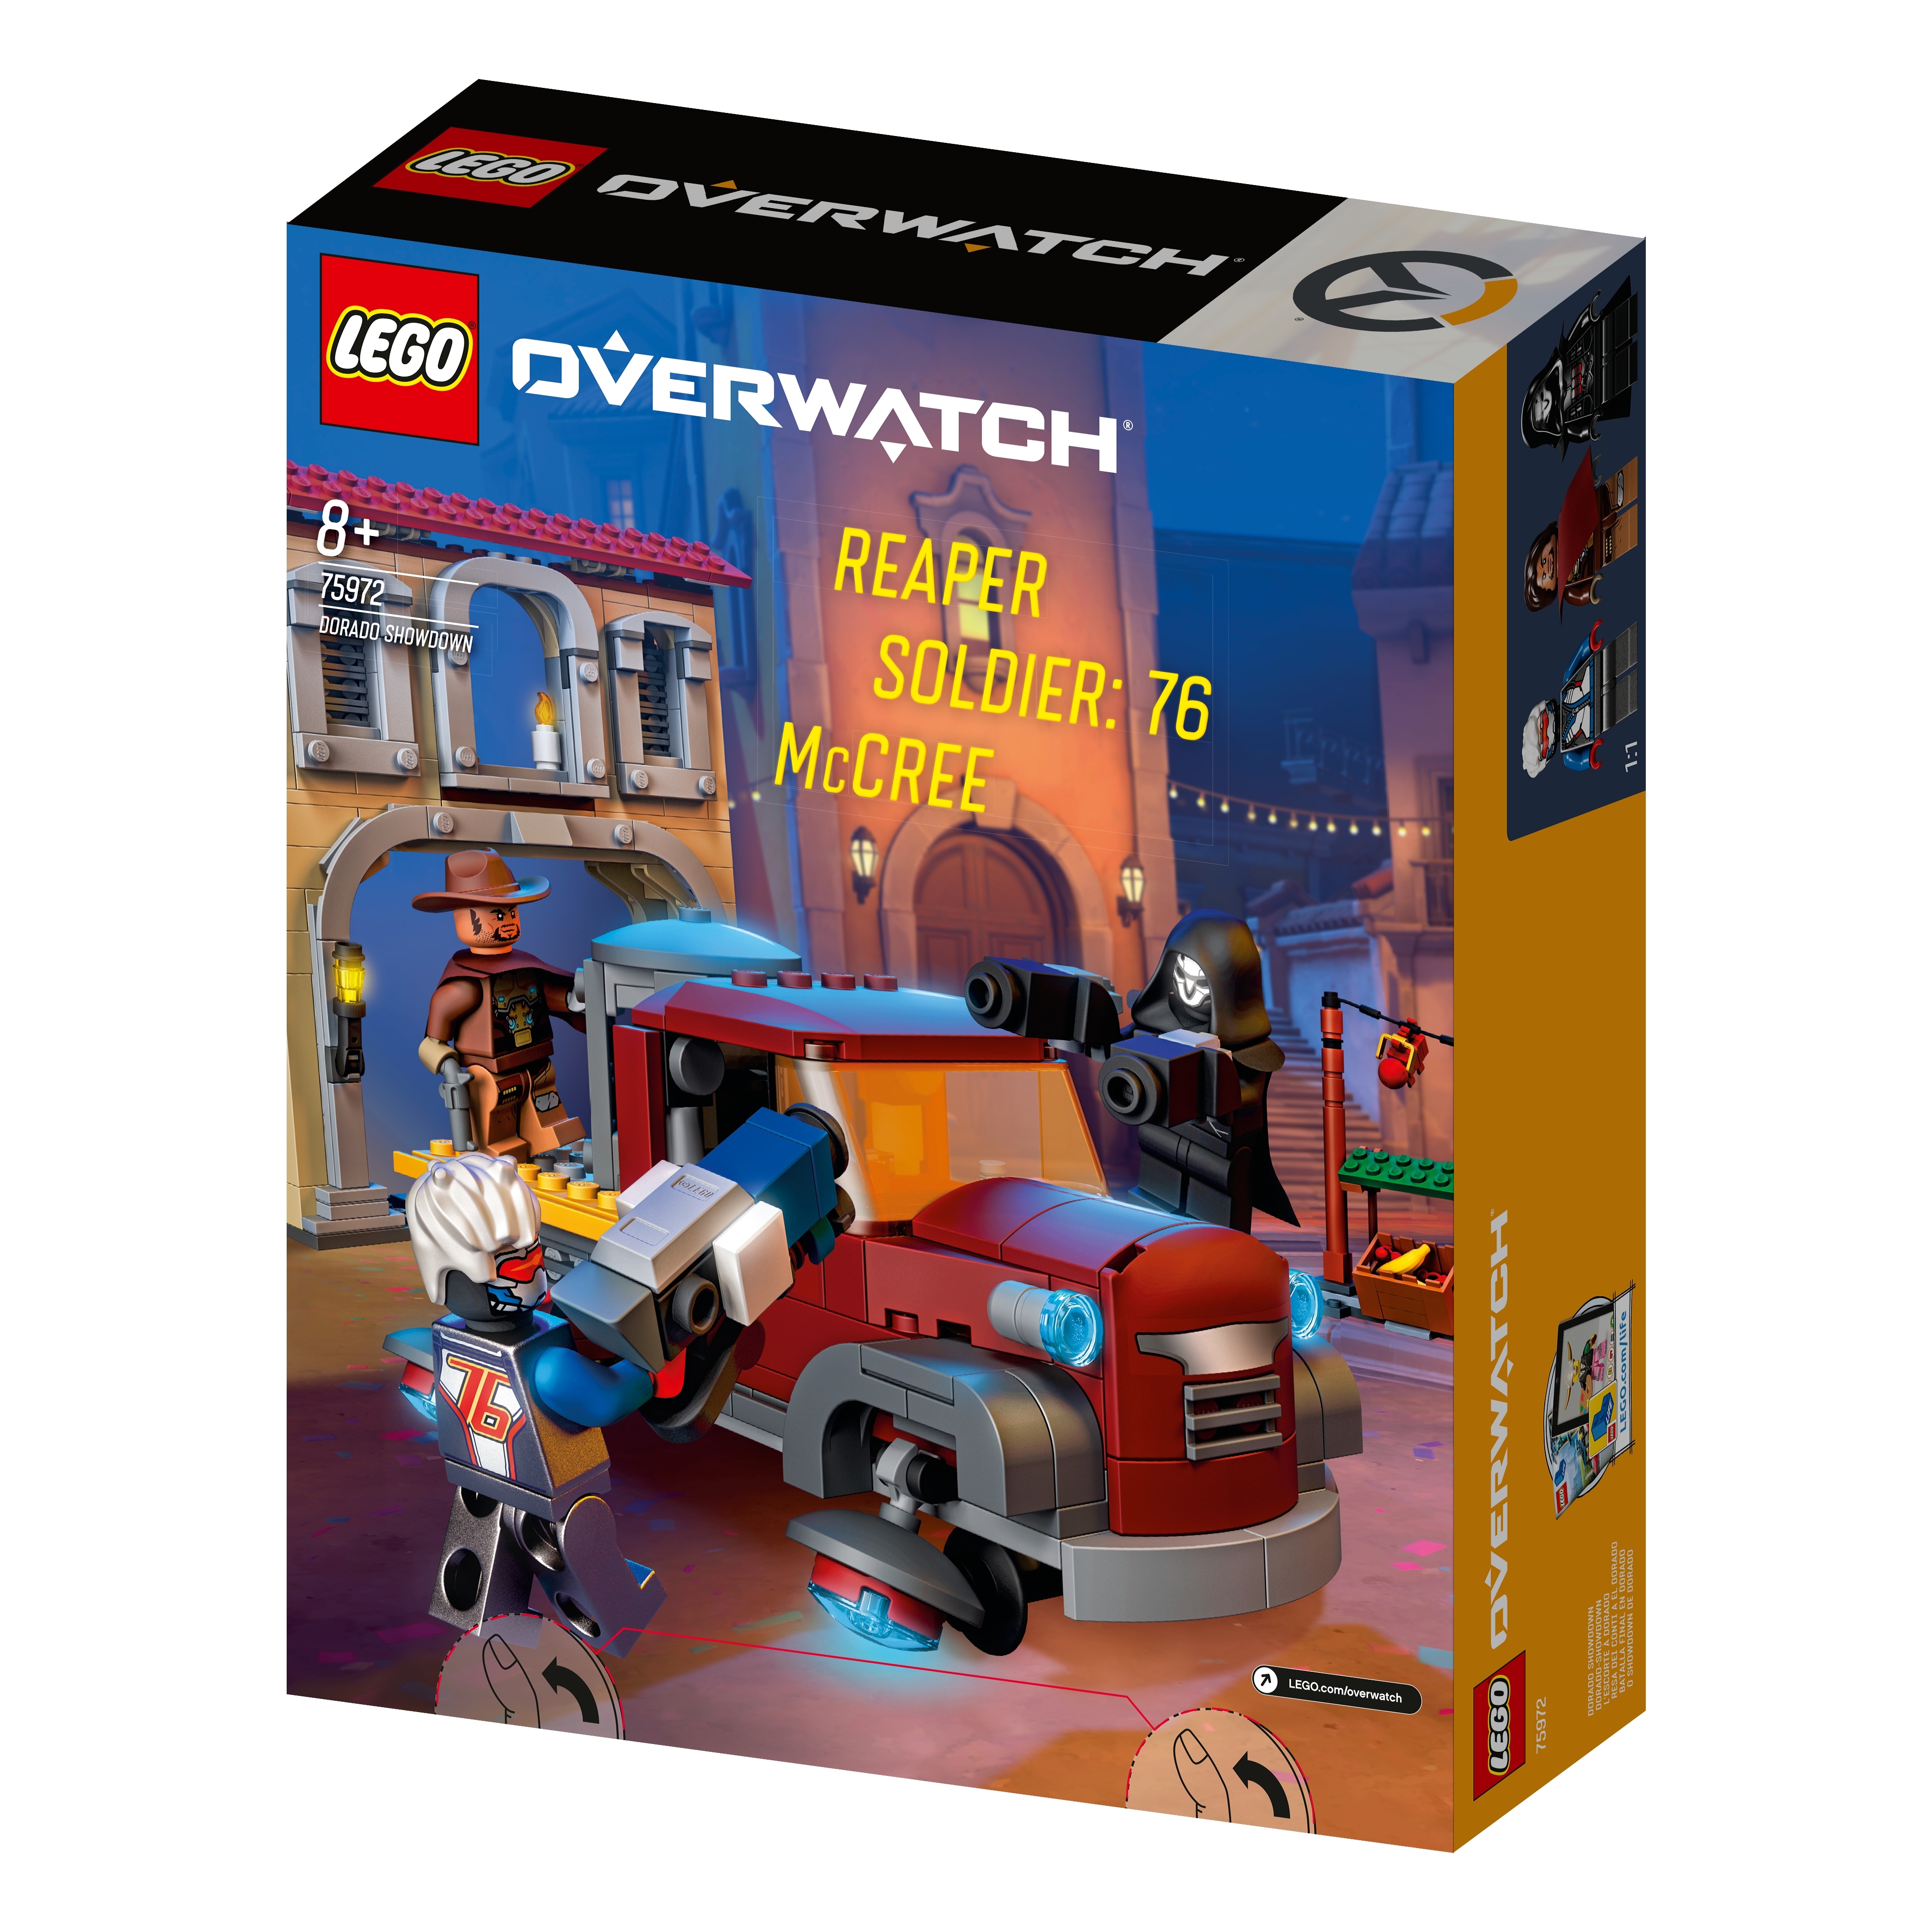 NEW Soldier 76 Overwatch 75972 Lego minifigure Figure